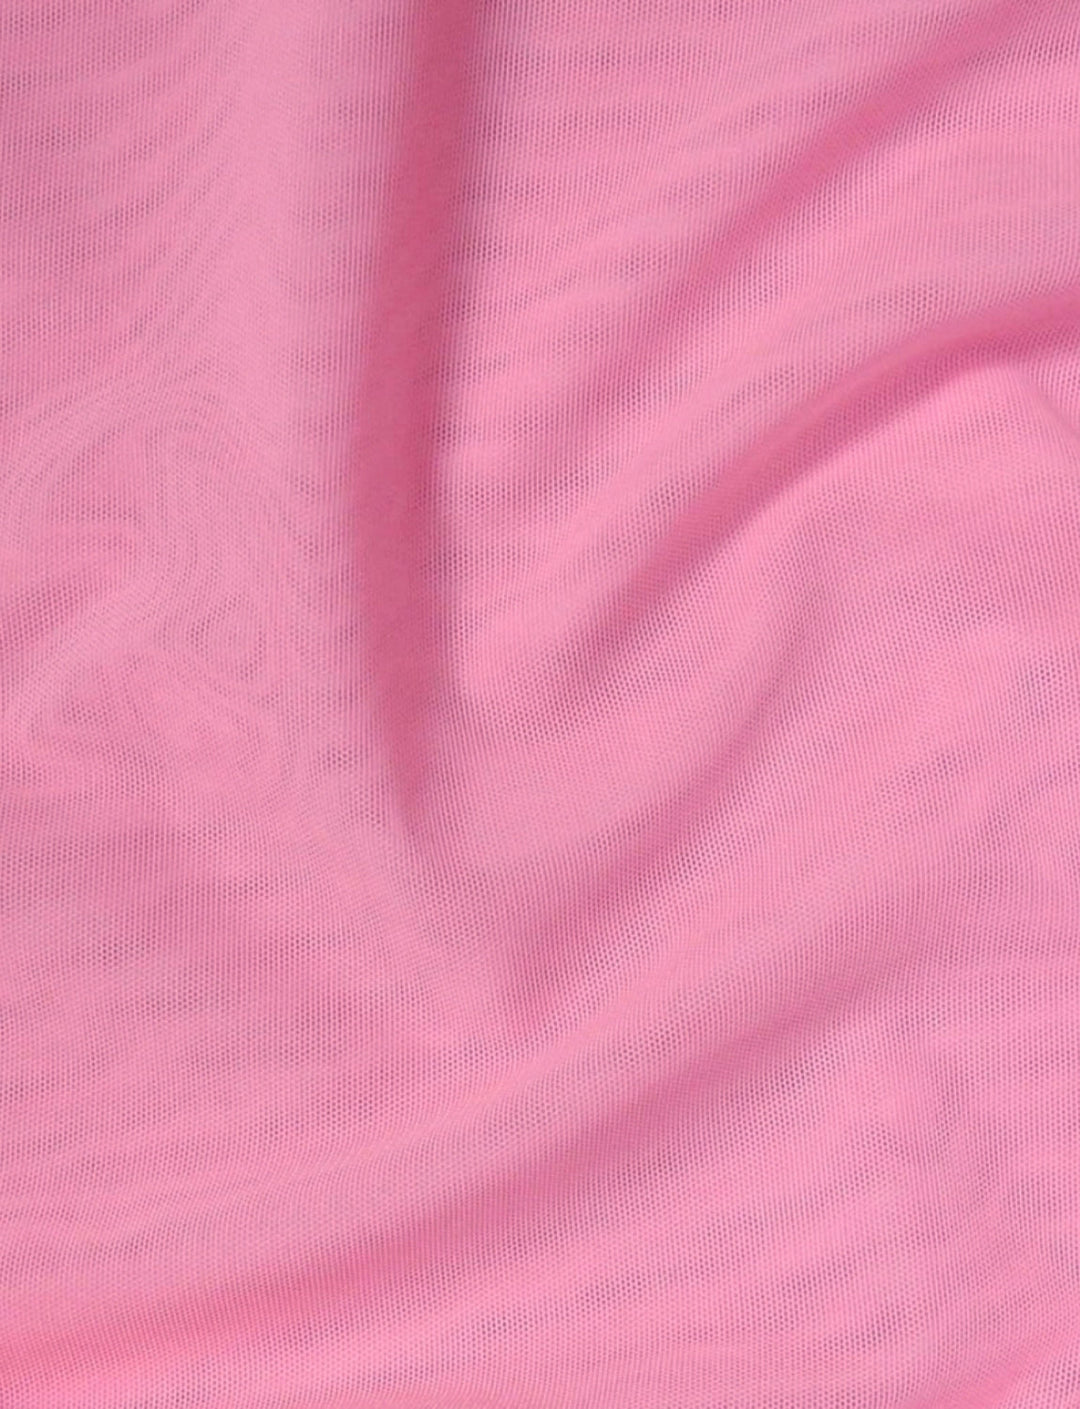 pink mesh fabric swatch